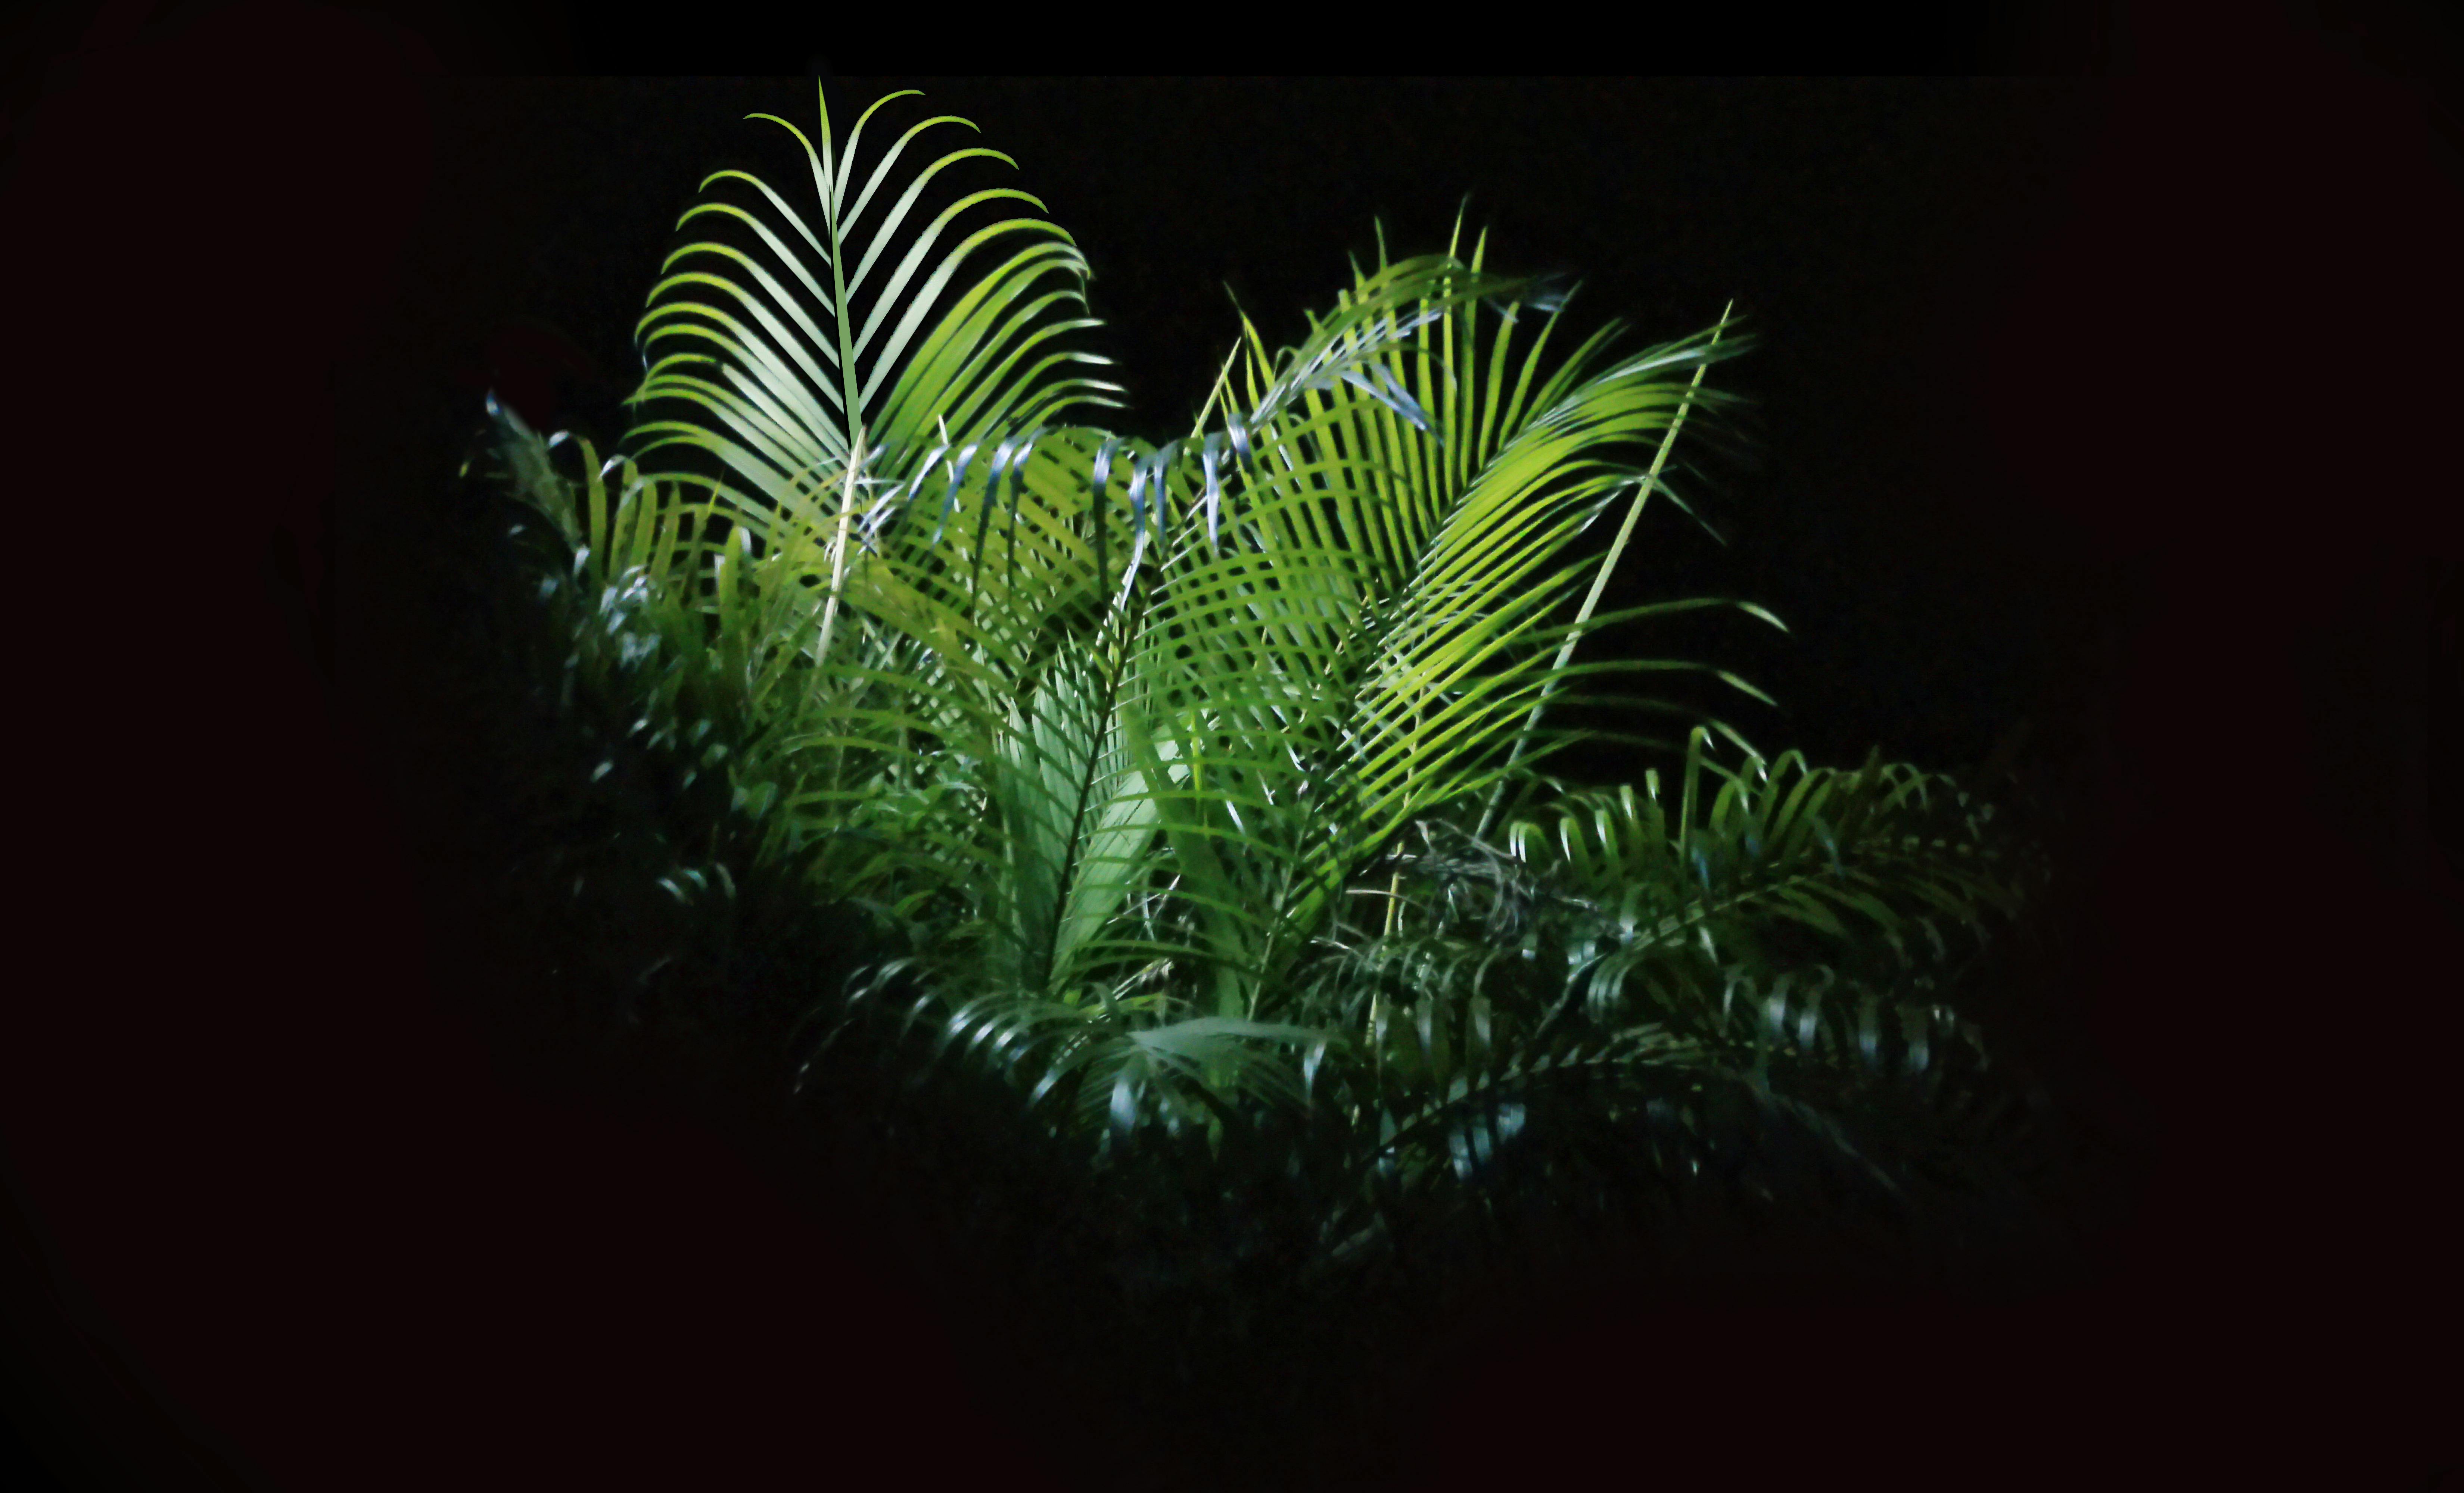 Free stock photo of darkness, lipstick palm tree, night lights